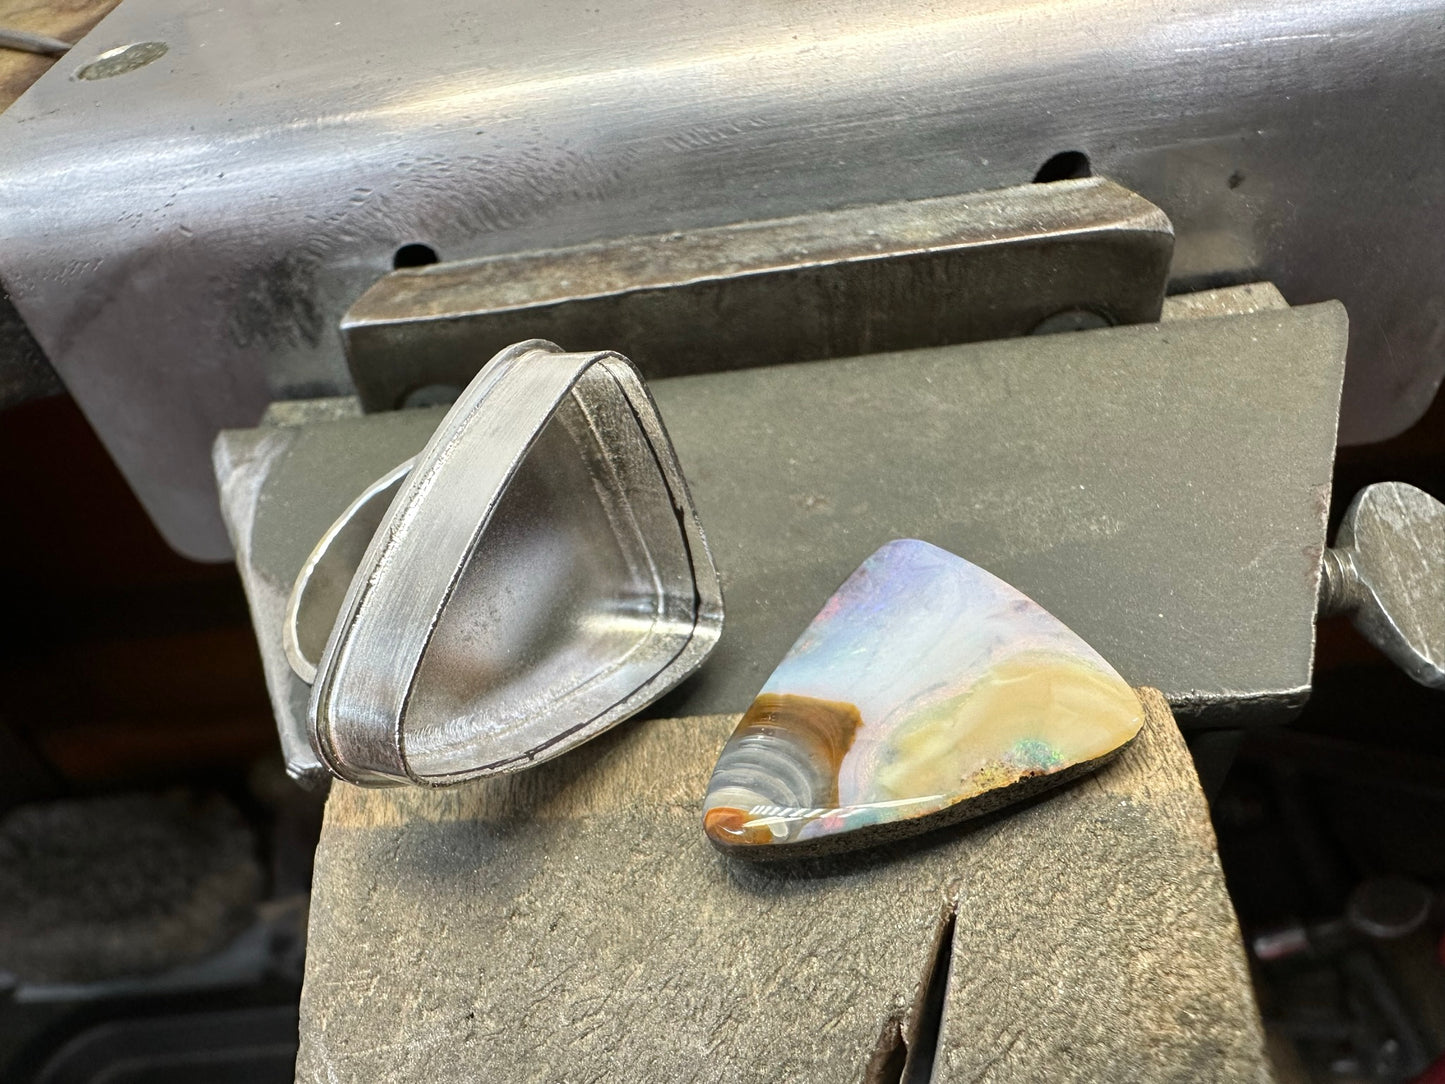 Pastel Opal Ring